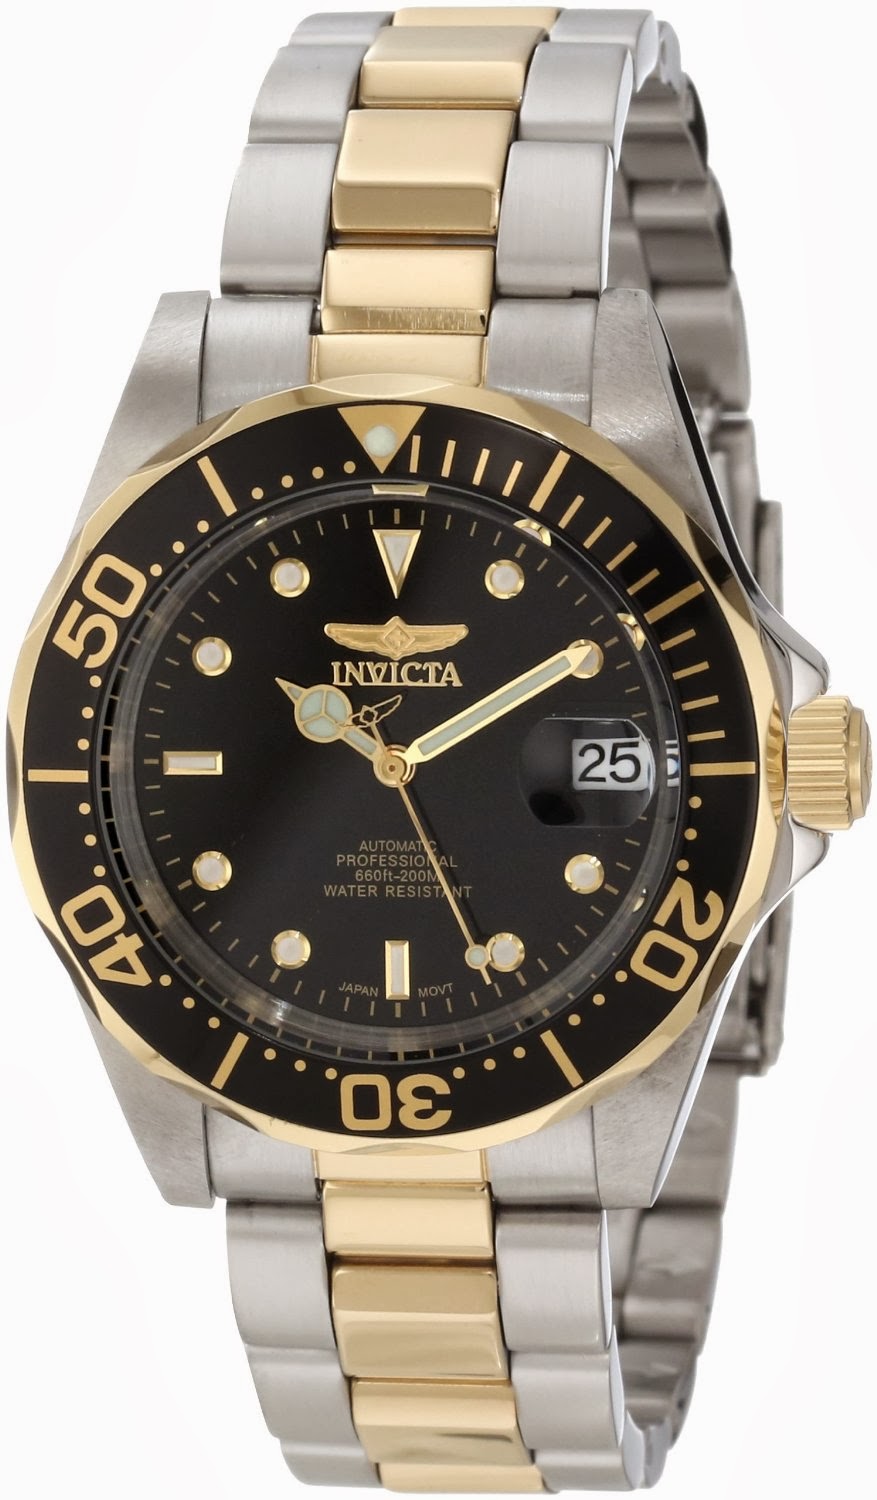 Diver Watch - Invicta 8927 , Mako Pro Diver Automatic Watch for Men.